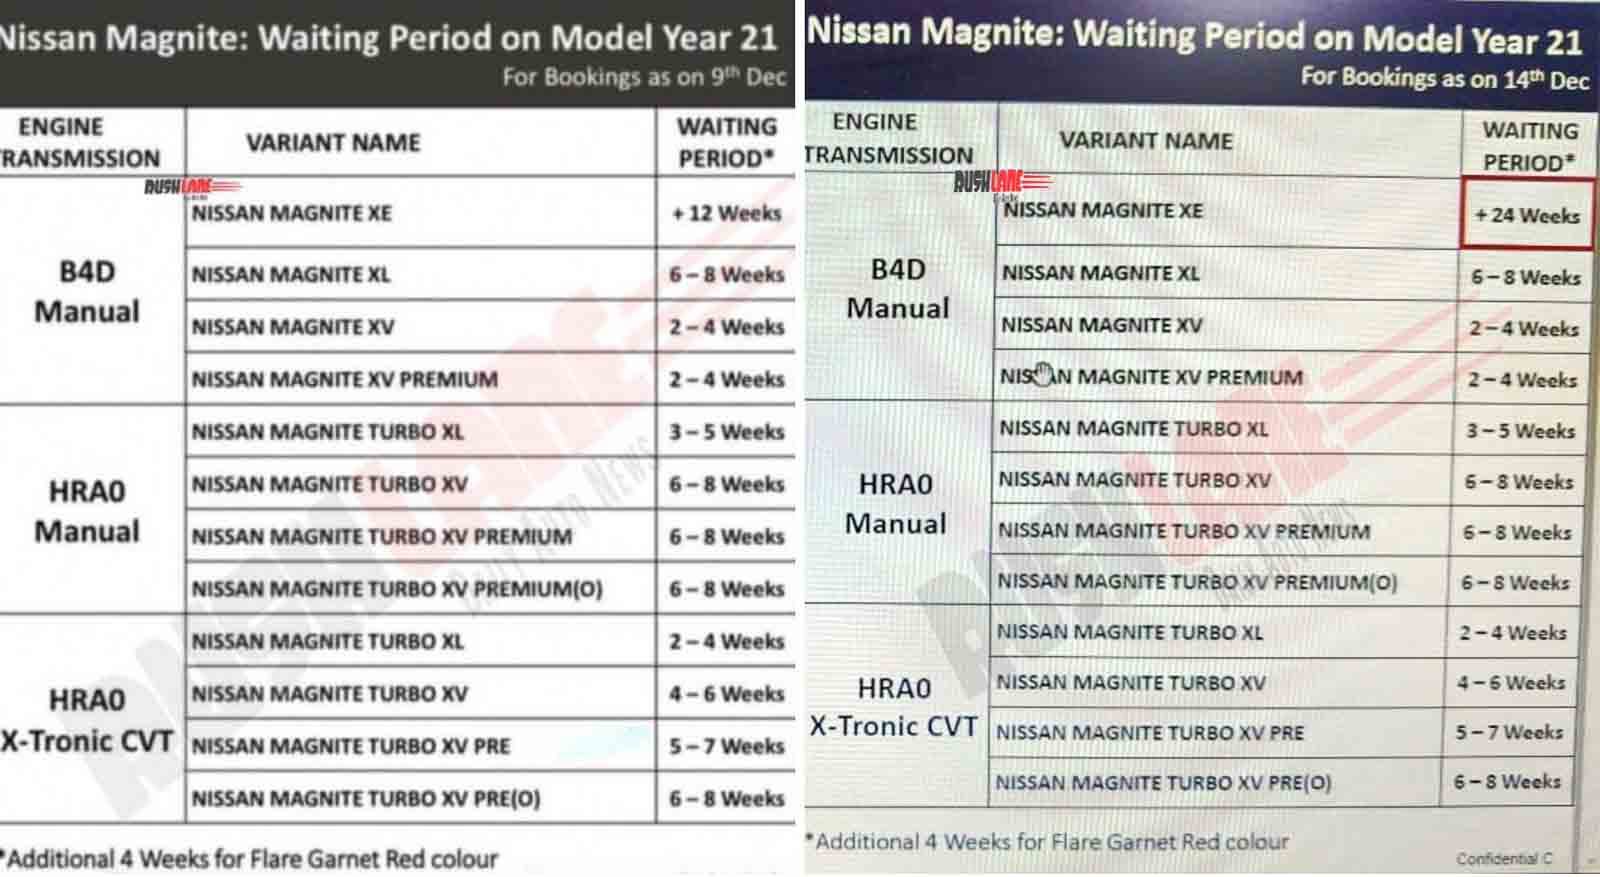 Nissan Magnite waiting period increase